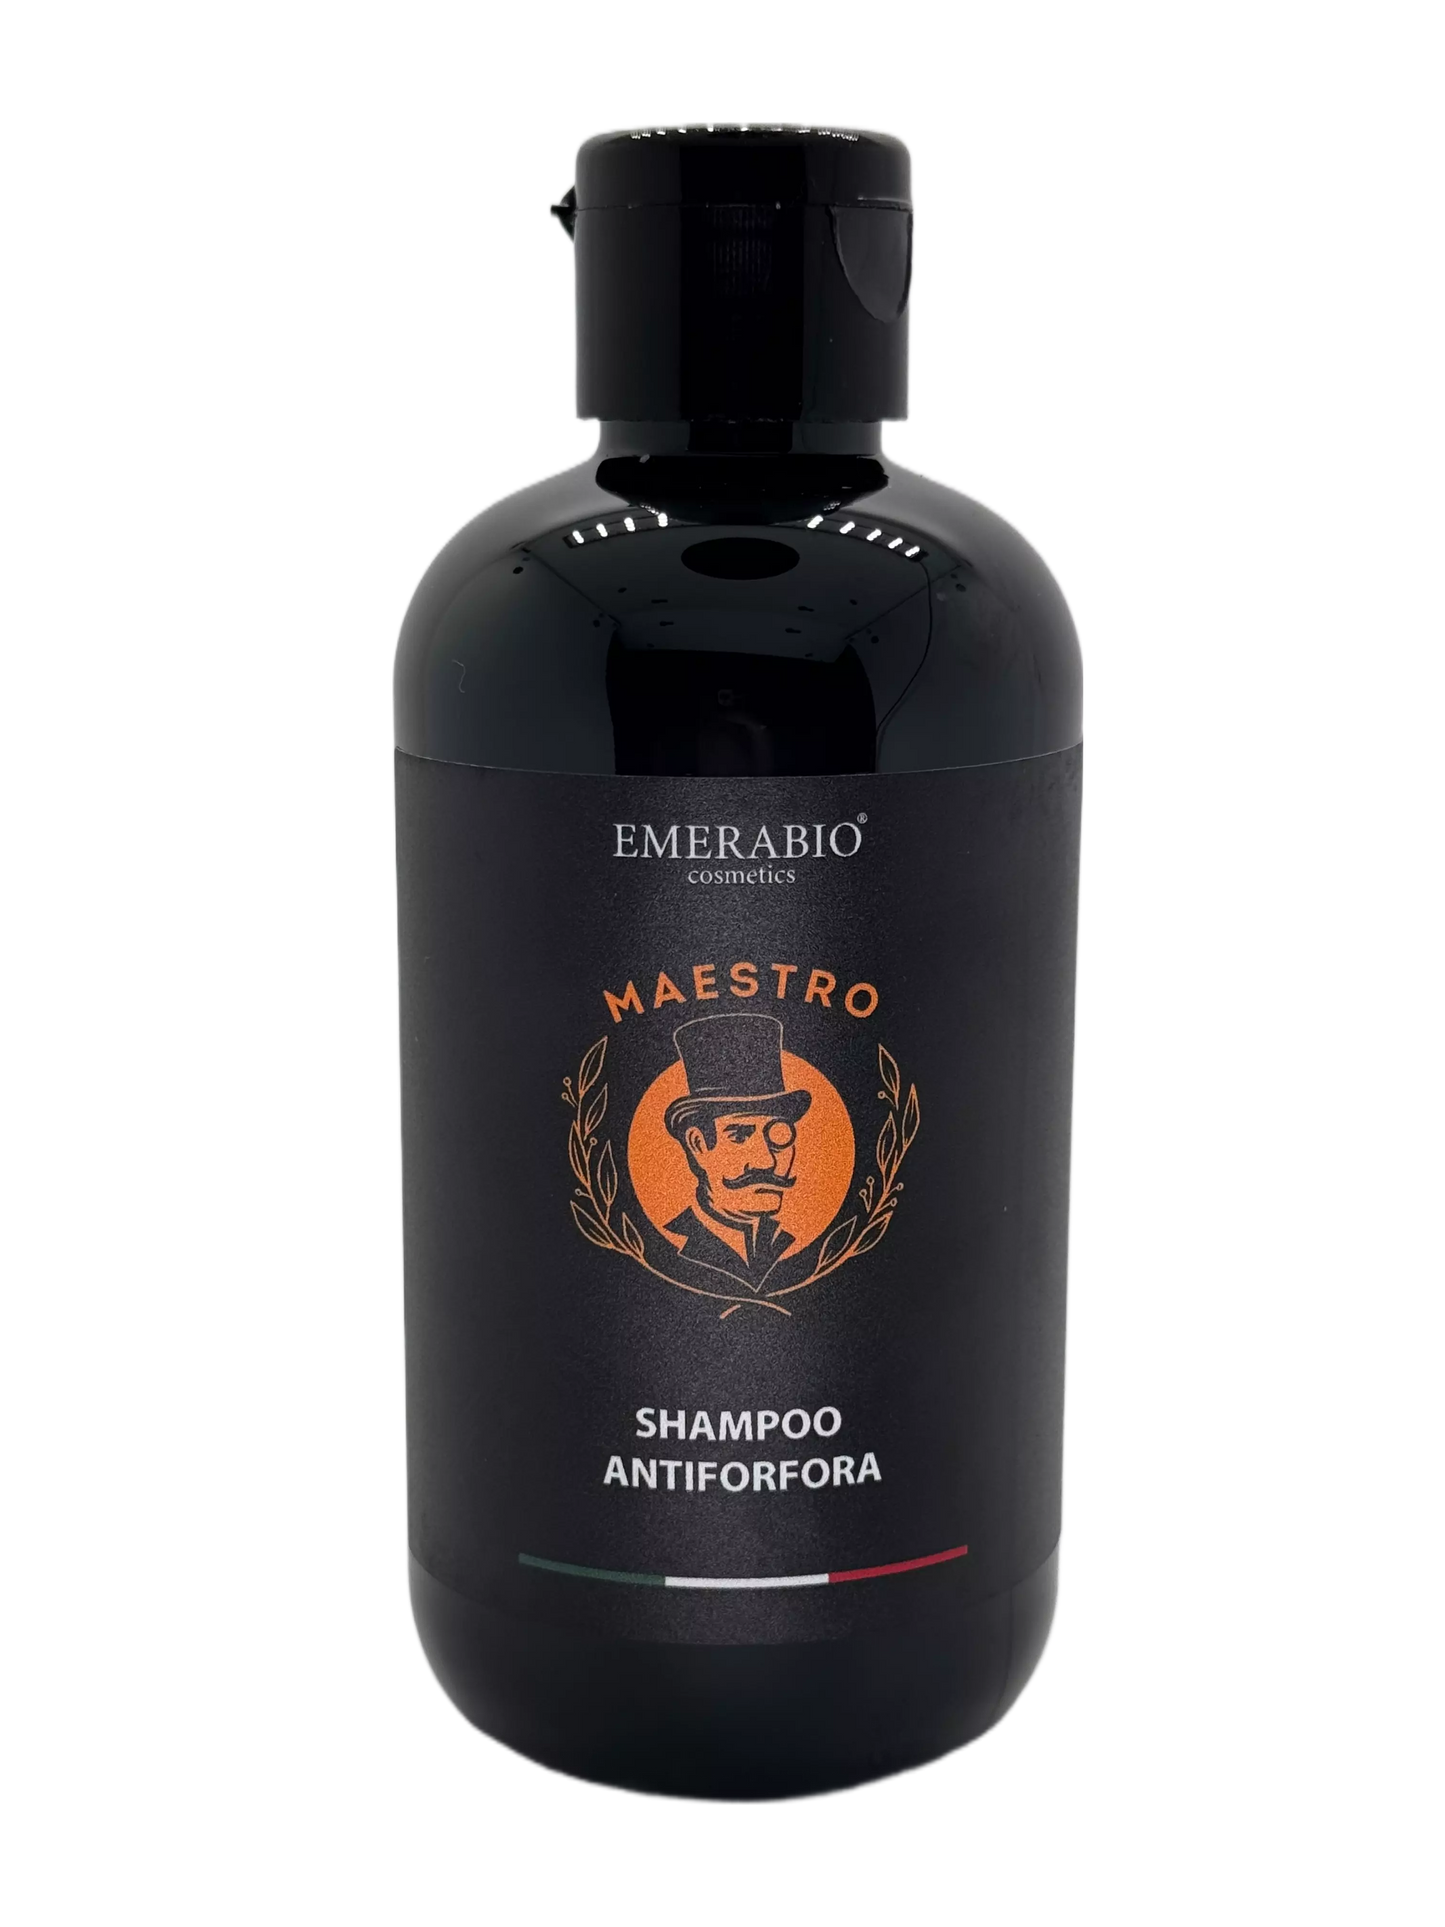 Shampoo Antiforfora